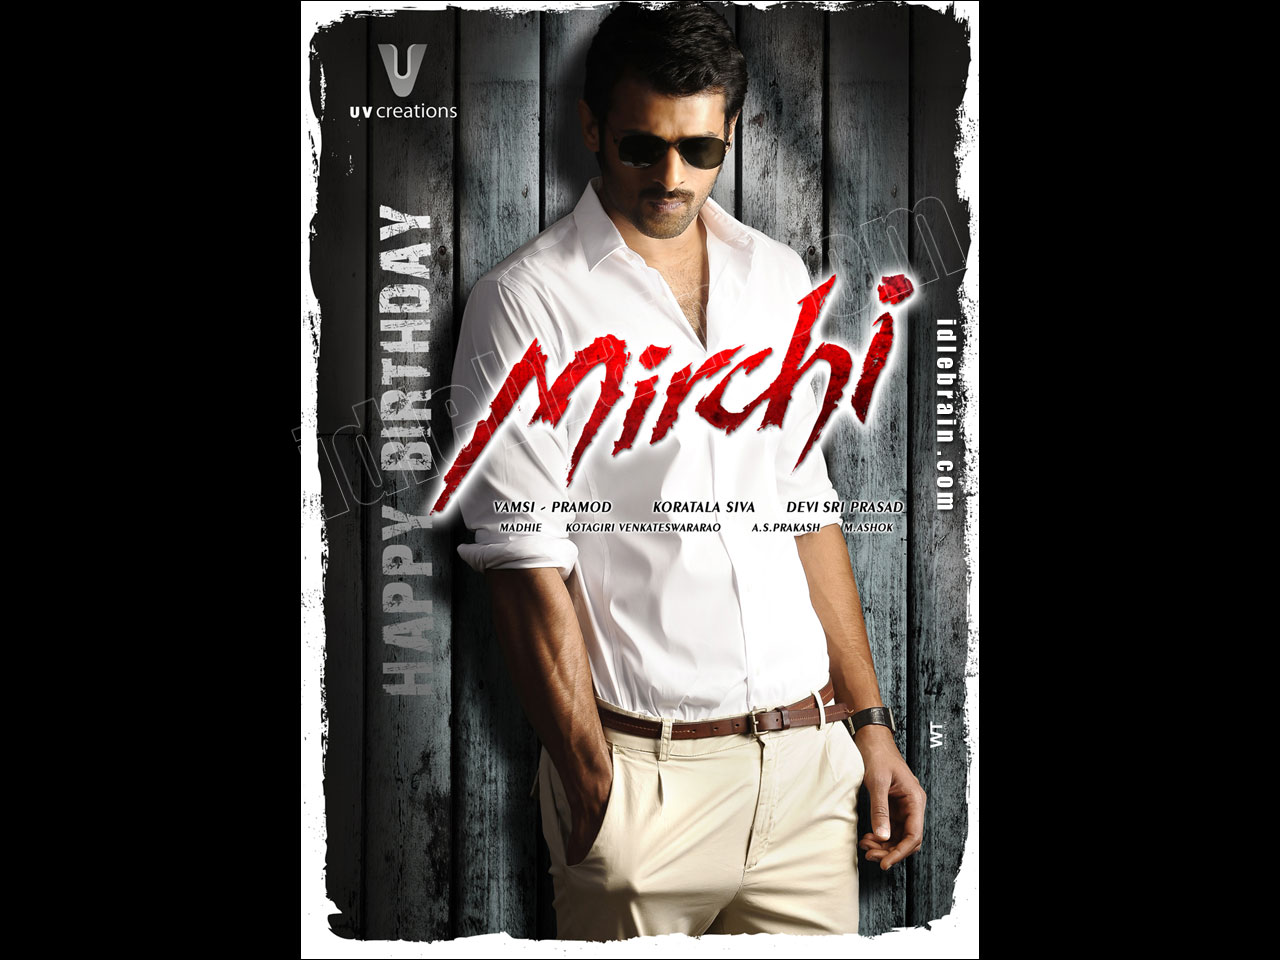 Mirchi - Telugu film wallpapers - Telugu cinema - Prabhas